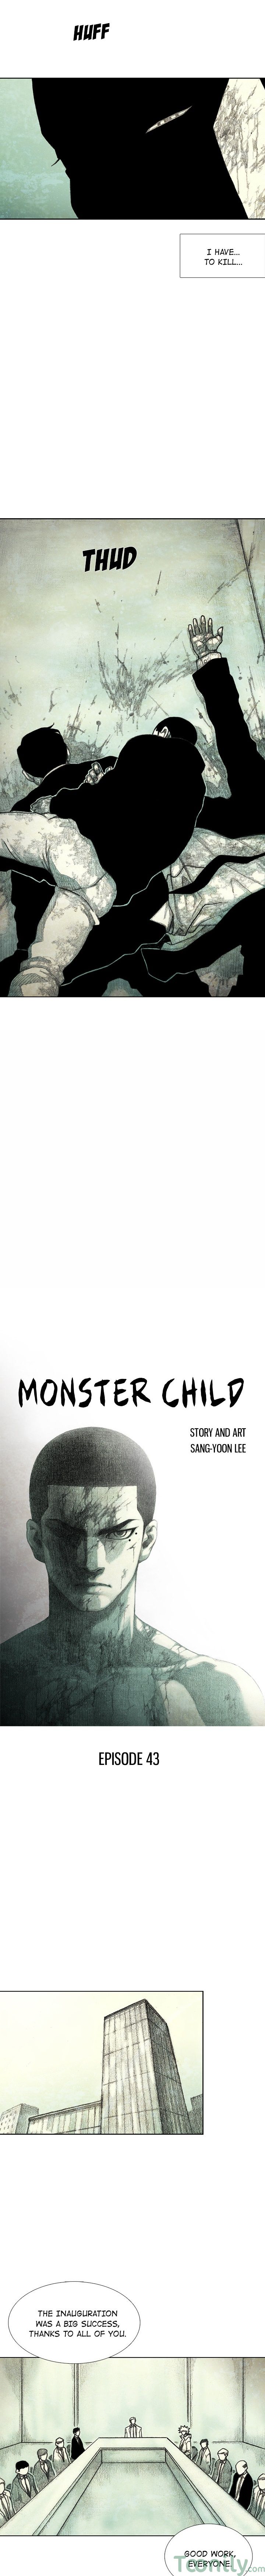 Monster Child image